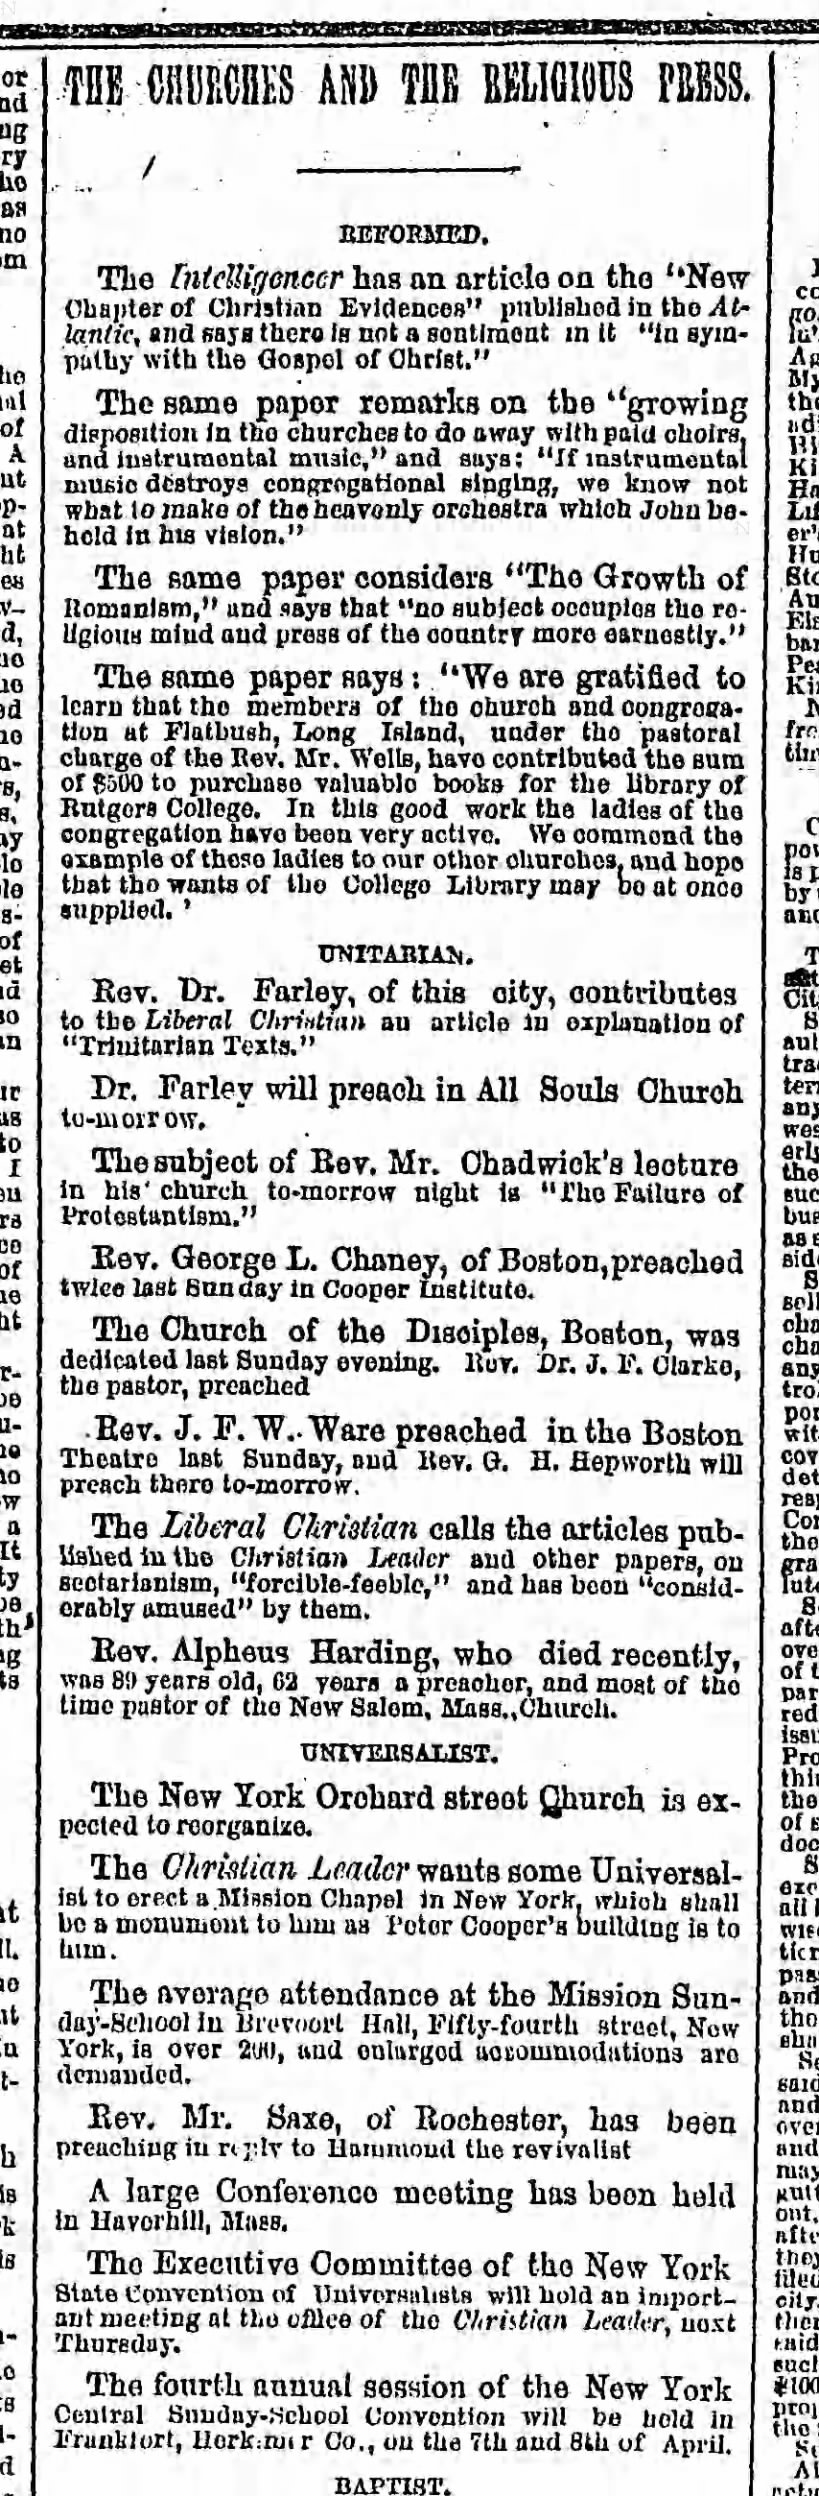 1869.03.06 Notice Rev. George L Chaney Preaches at Cooper Institute